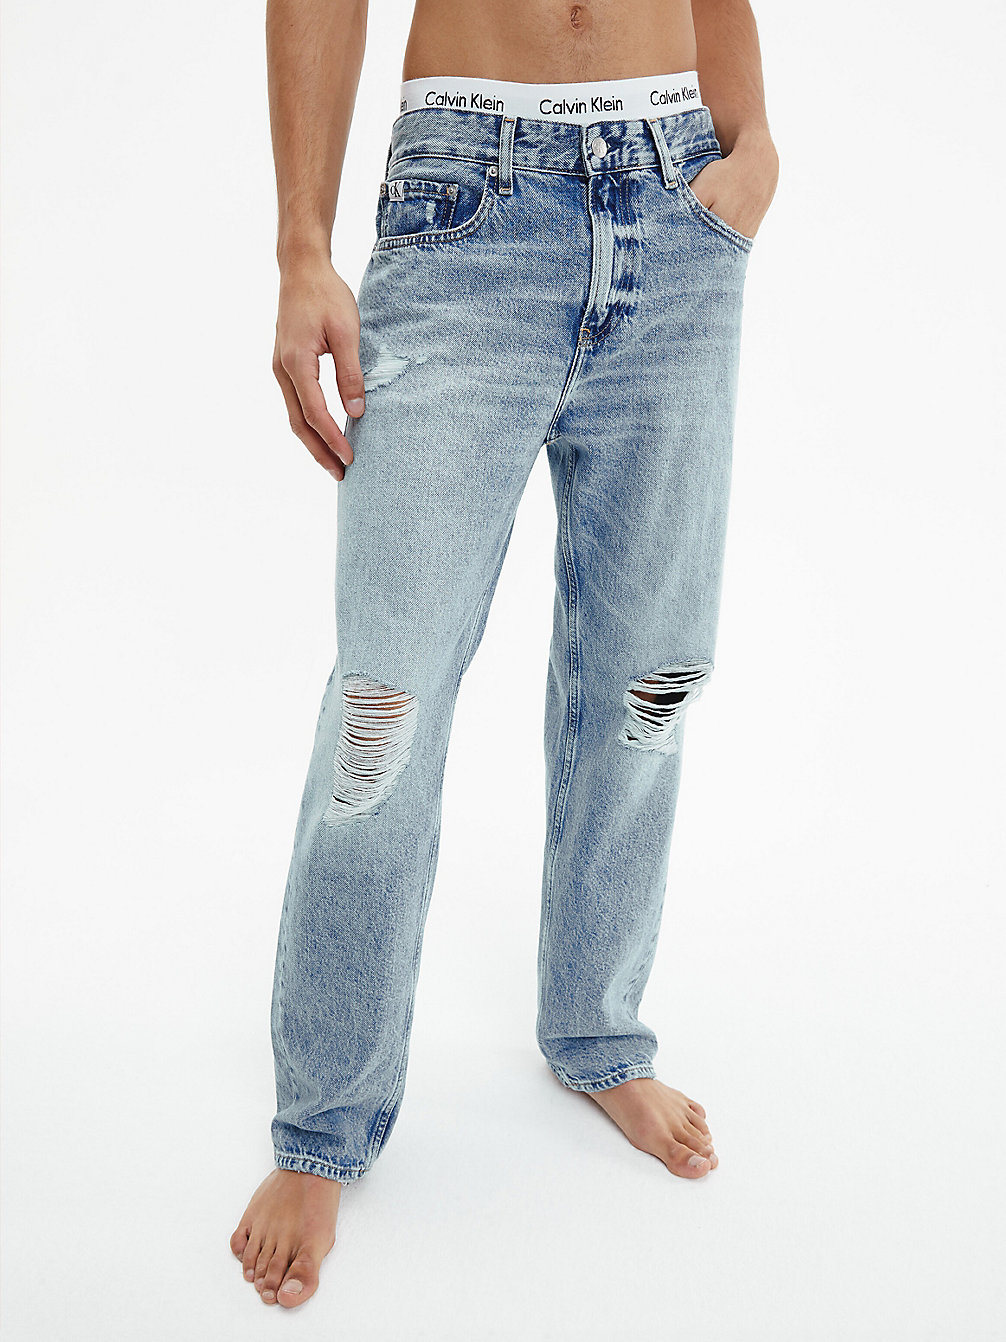 Jeans Straight Estilo Años 90 > DENIM LIGHT > undefined hombre > Calvin Klein